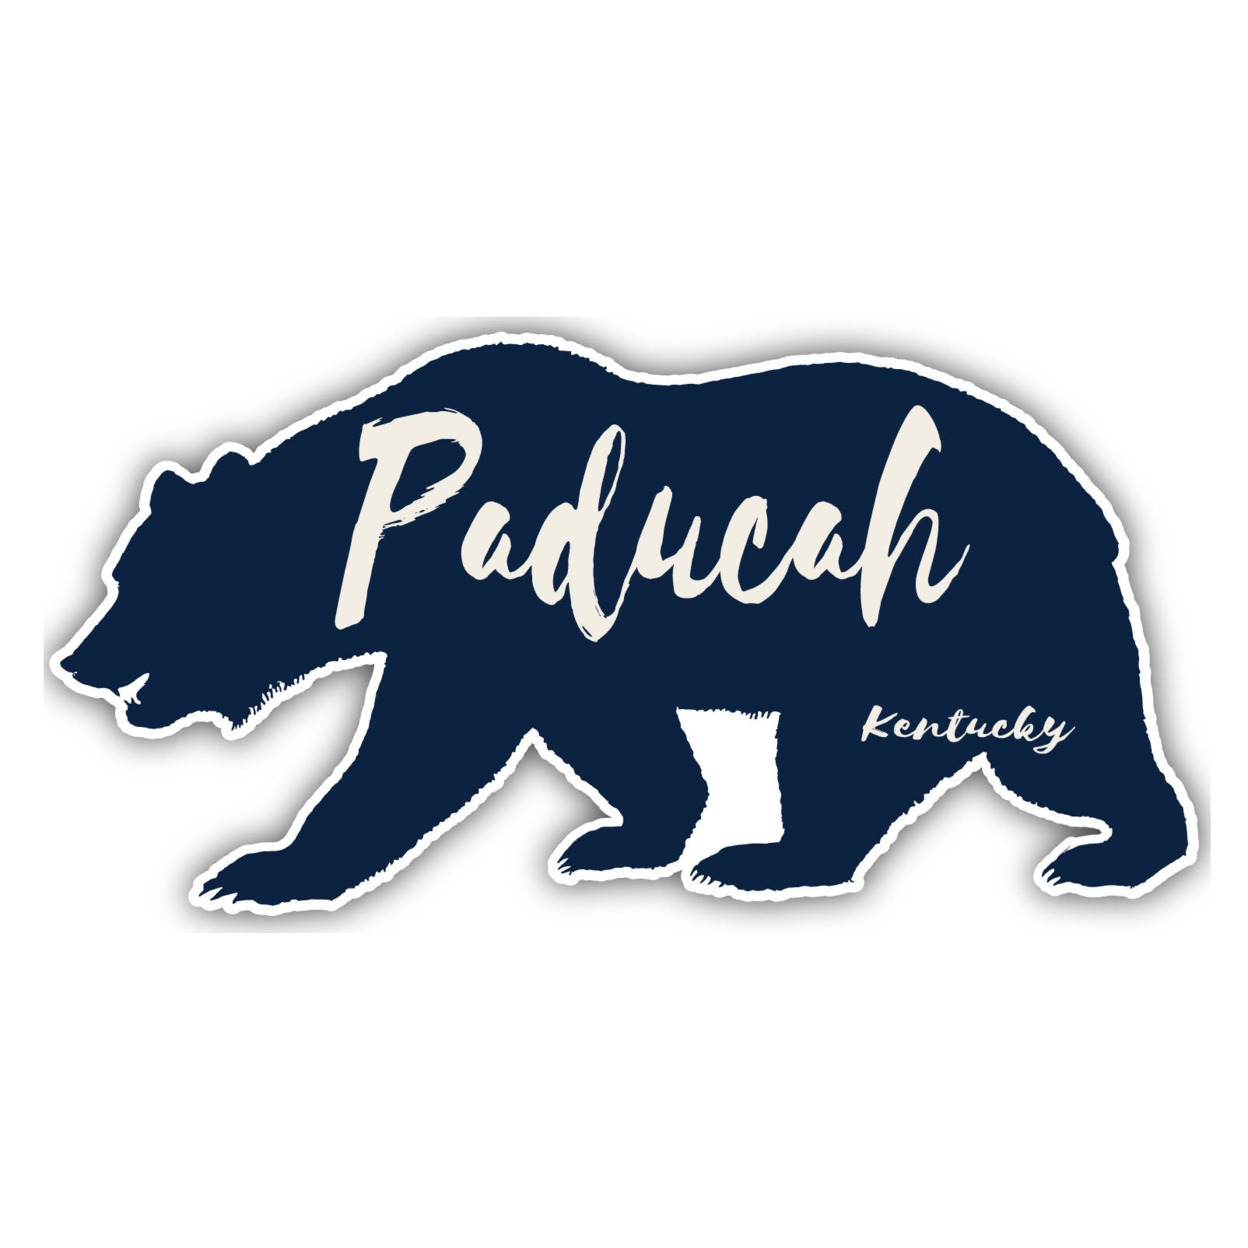 Paducah Kentucky Souvenir Decorative Stickers (Choose Theme And Size) - Single Unit, 4-Inch, Adventures Awaits